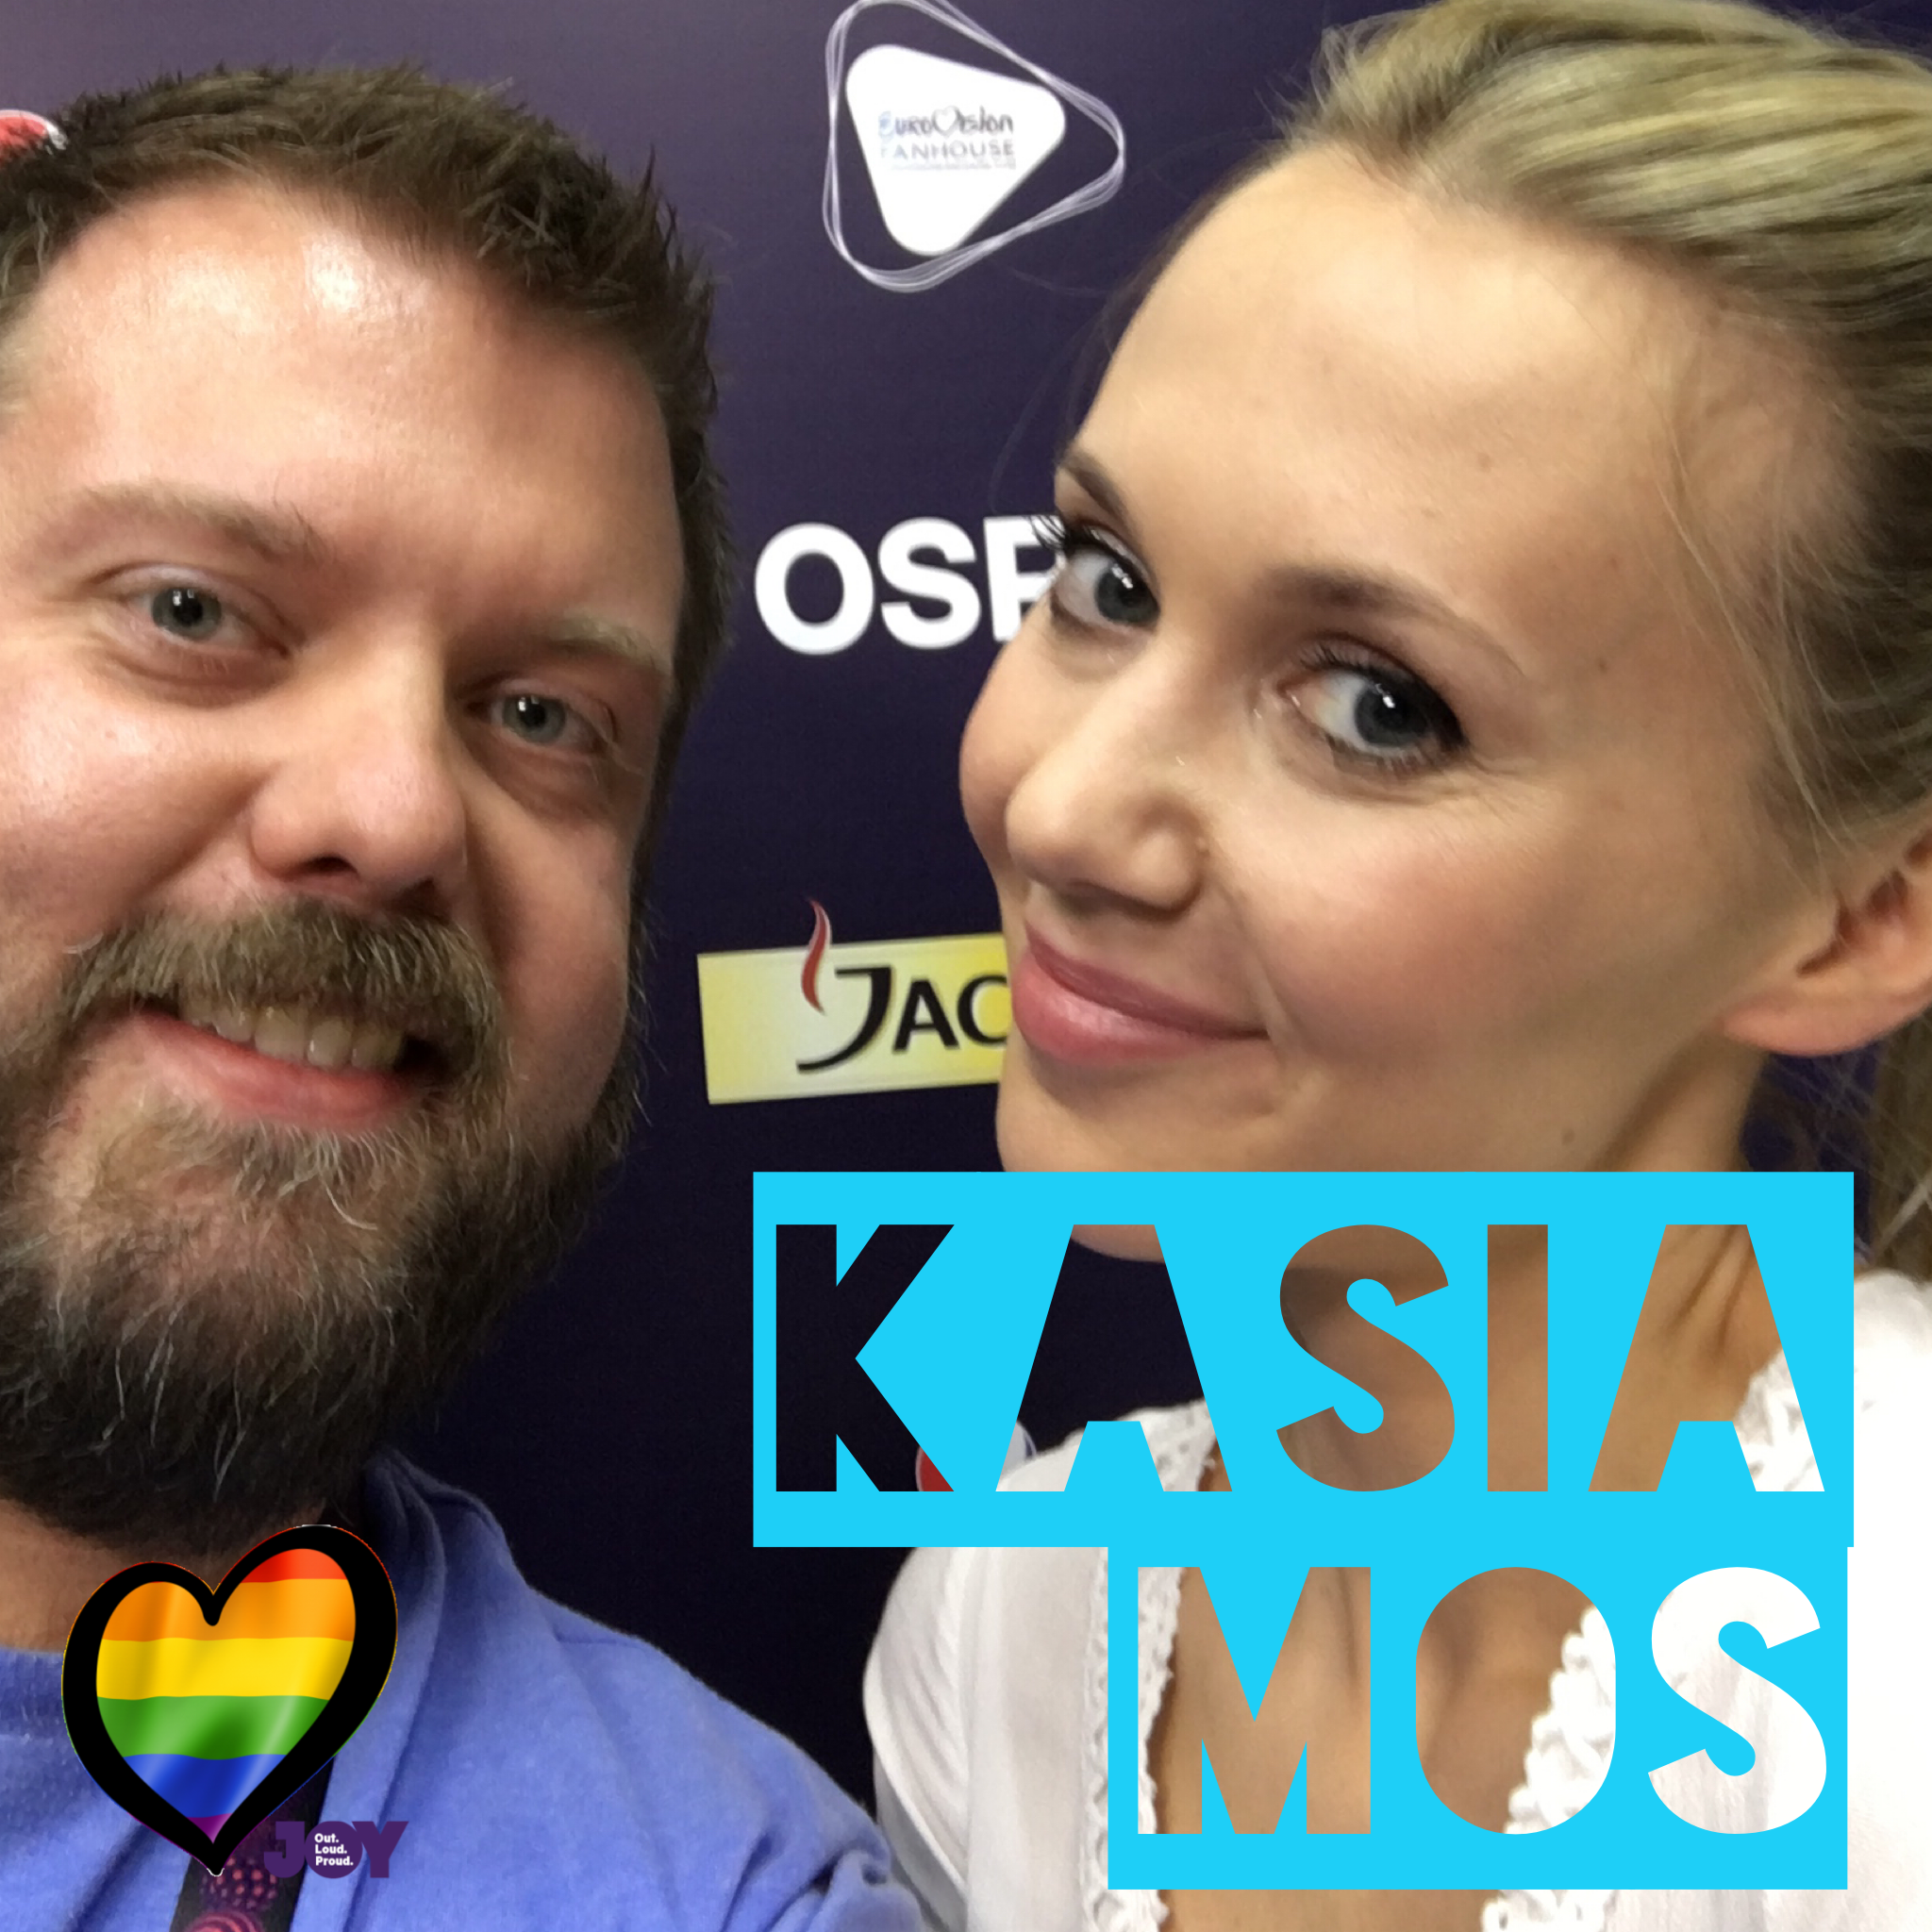 Poland: Kasia Talks To The Animals